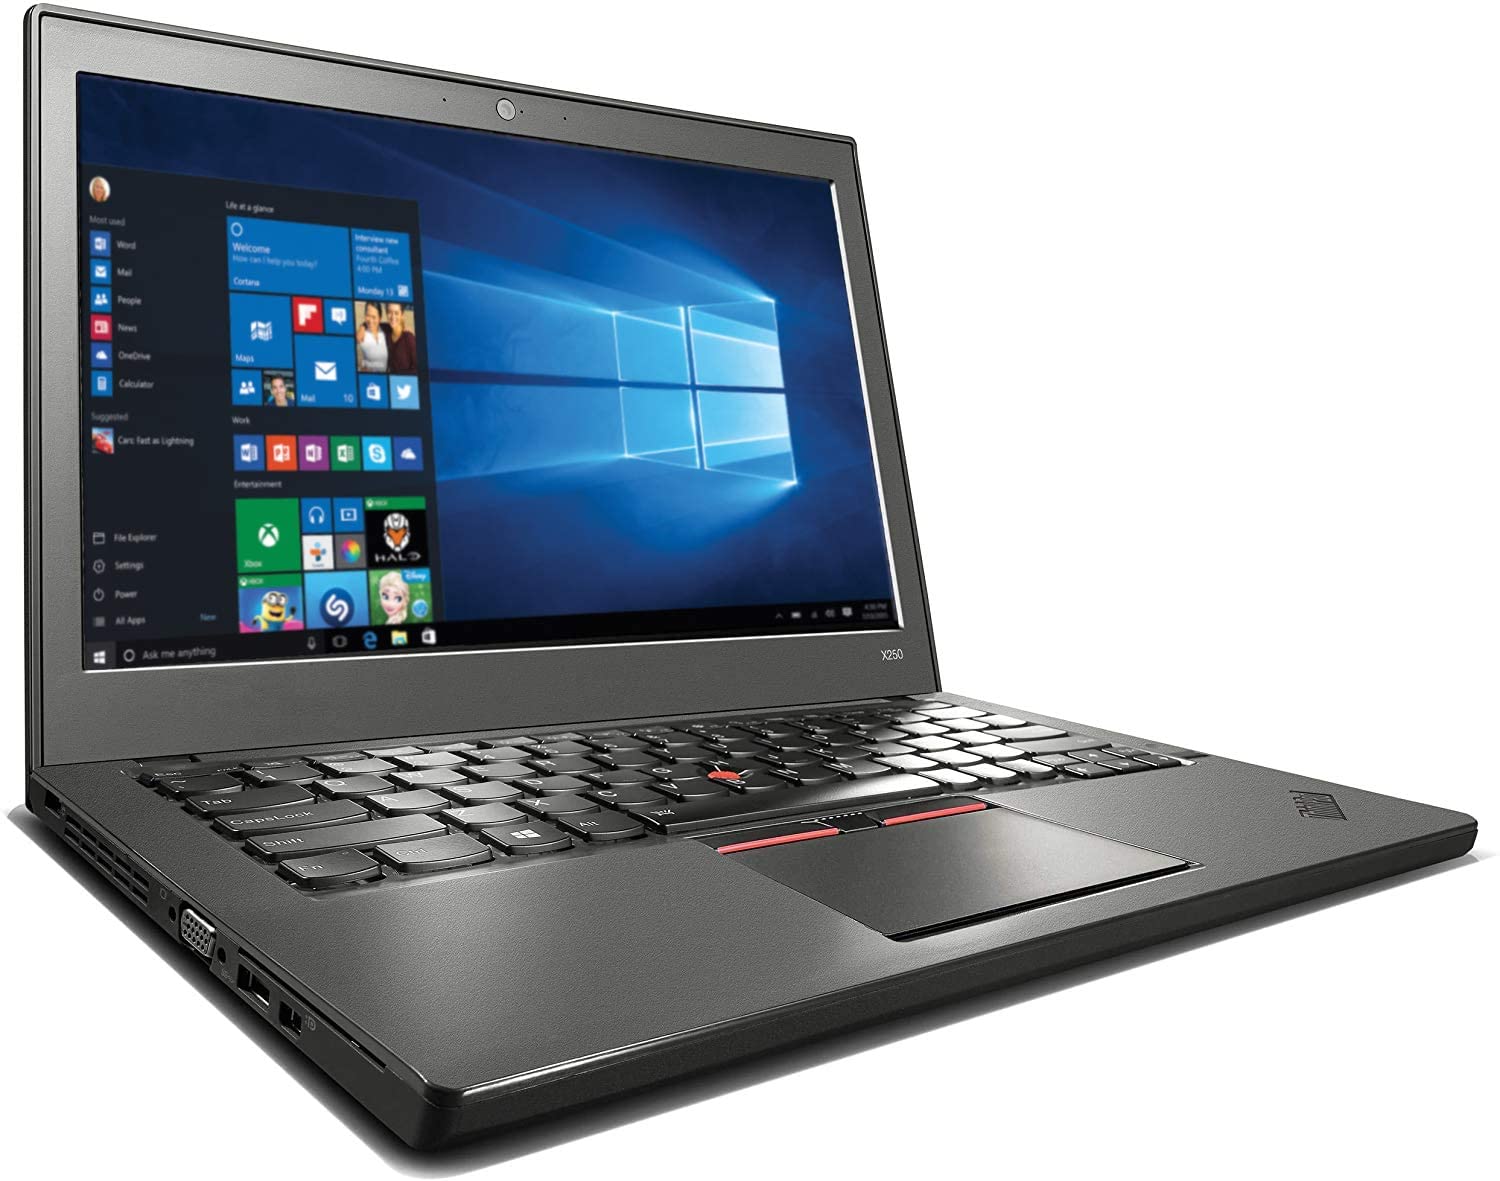 Refurbished Lenovo ThinkPad X250 Laptop